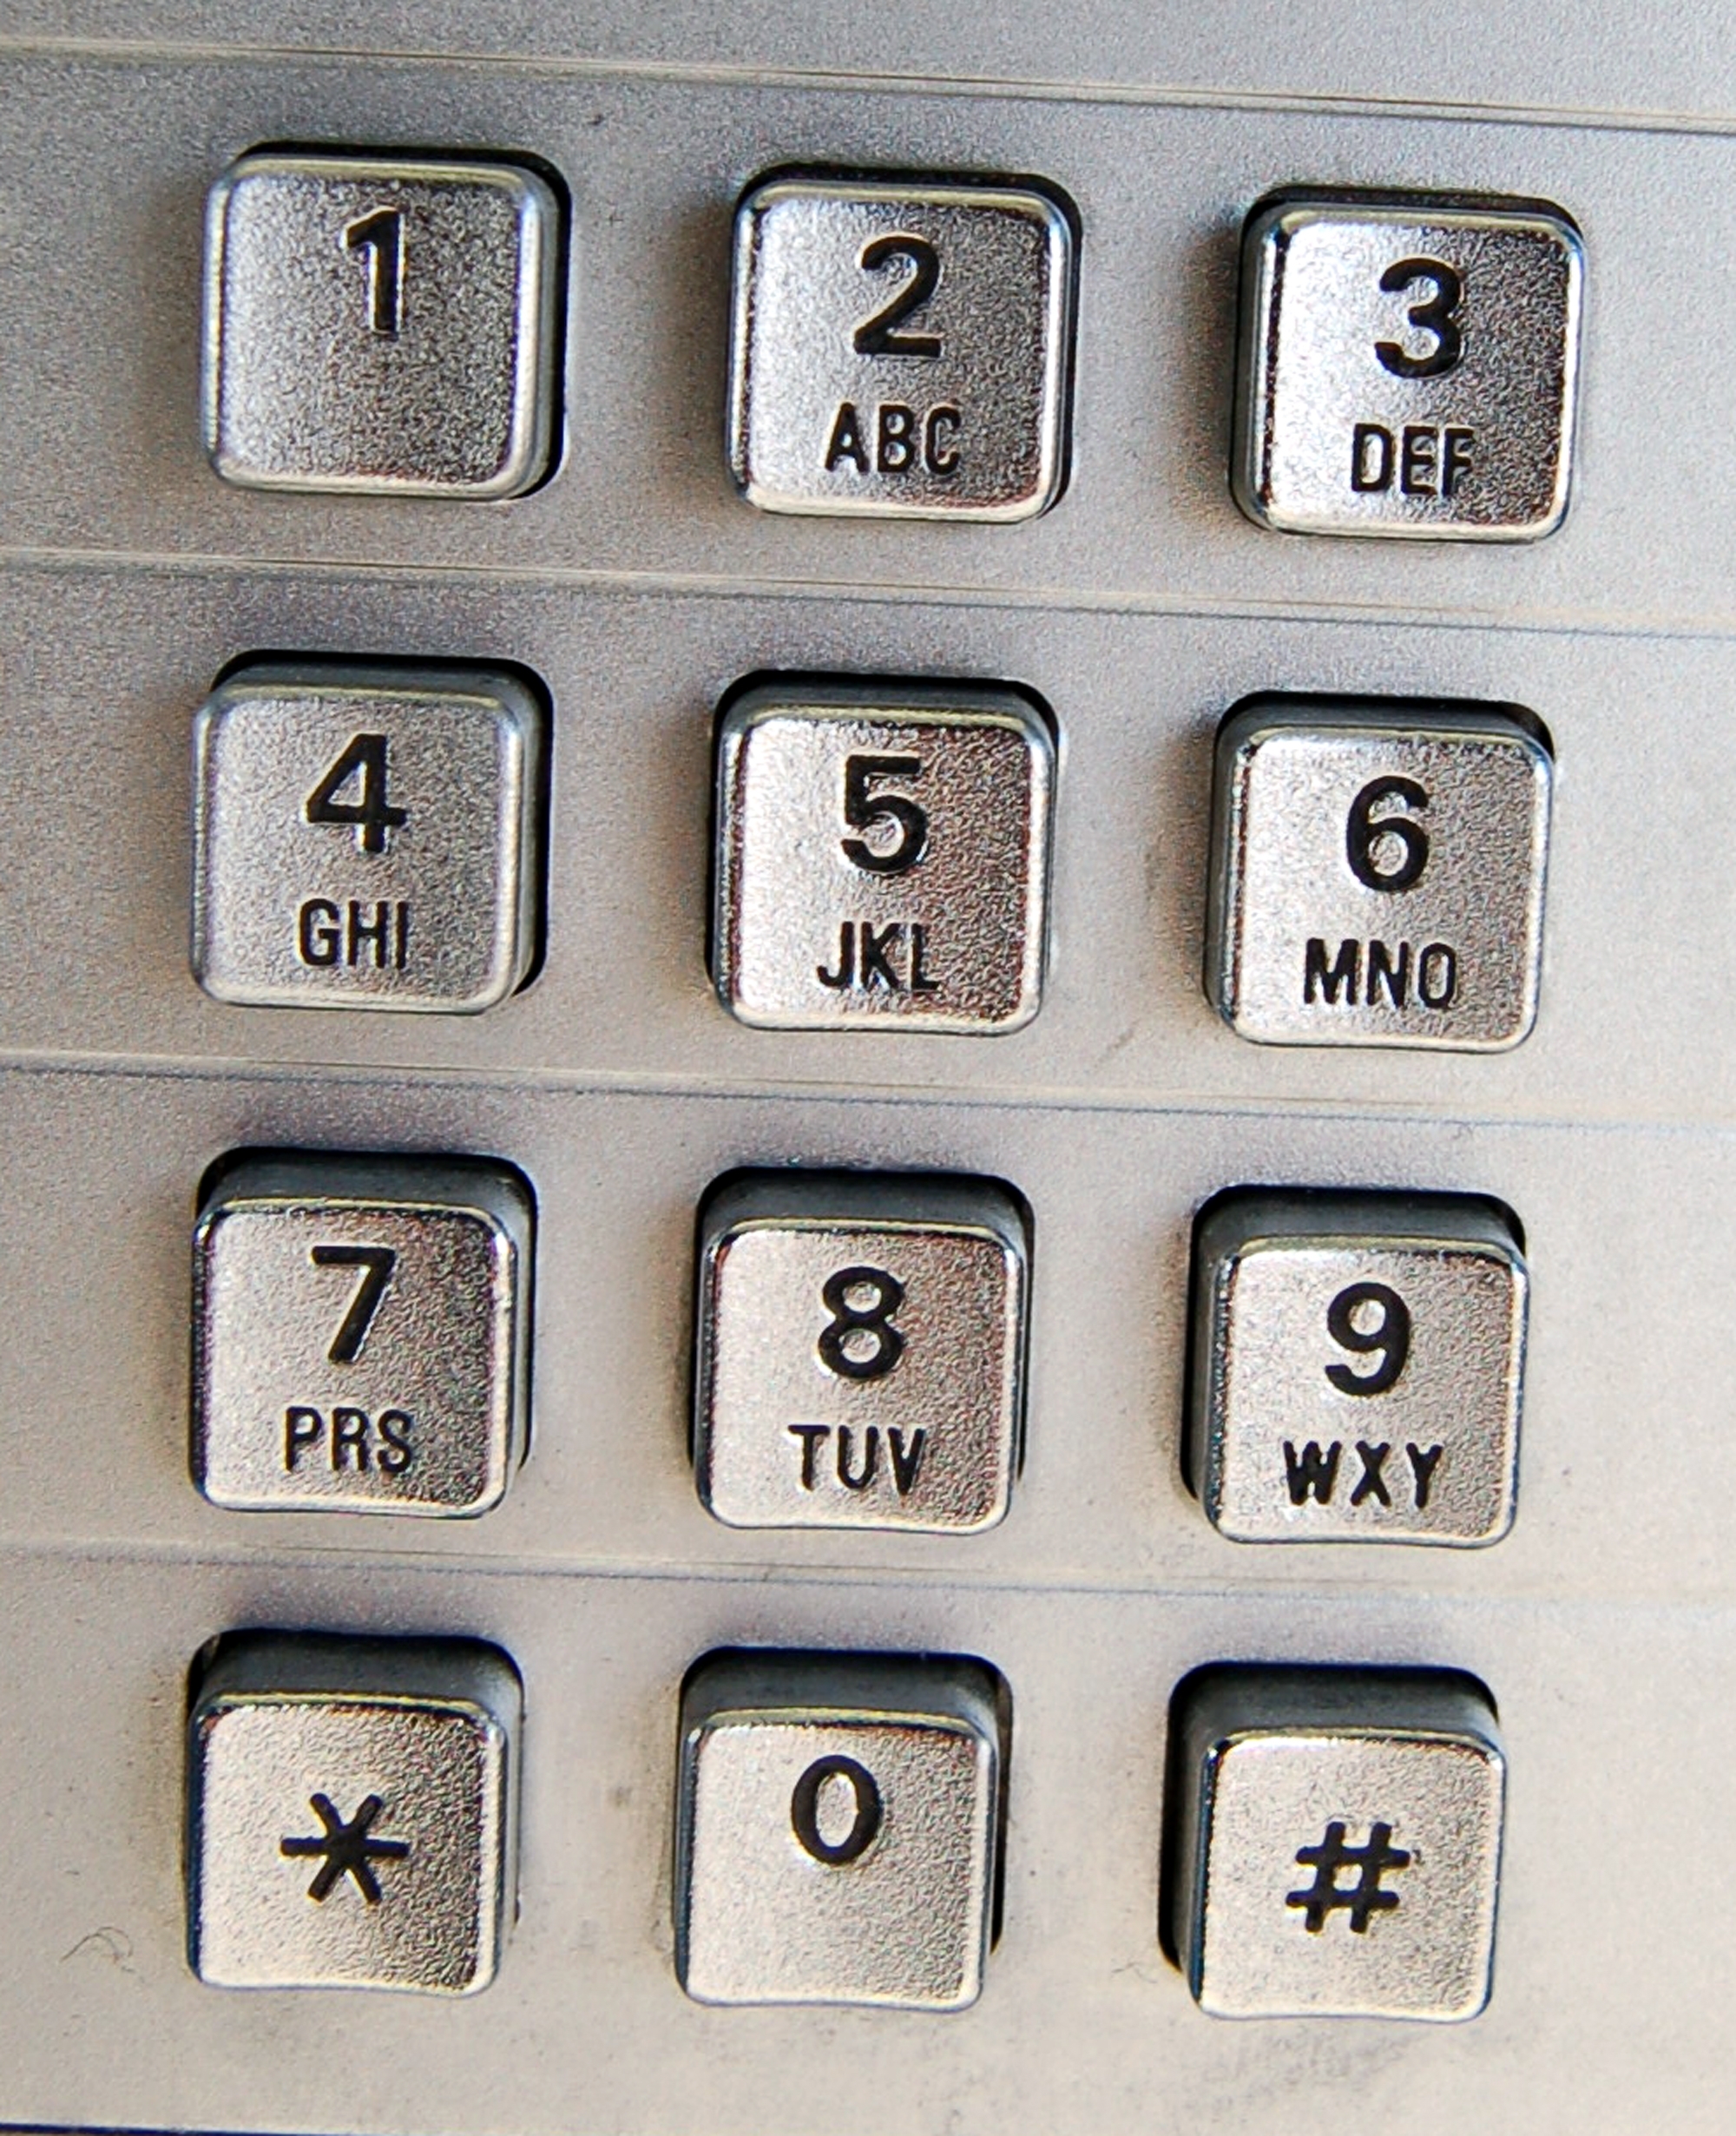 telephone number pad